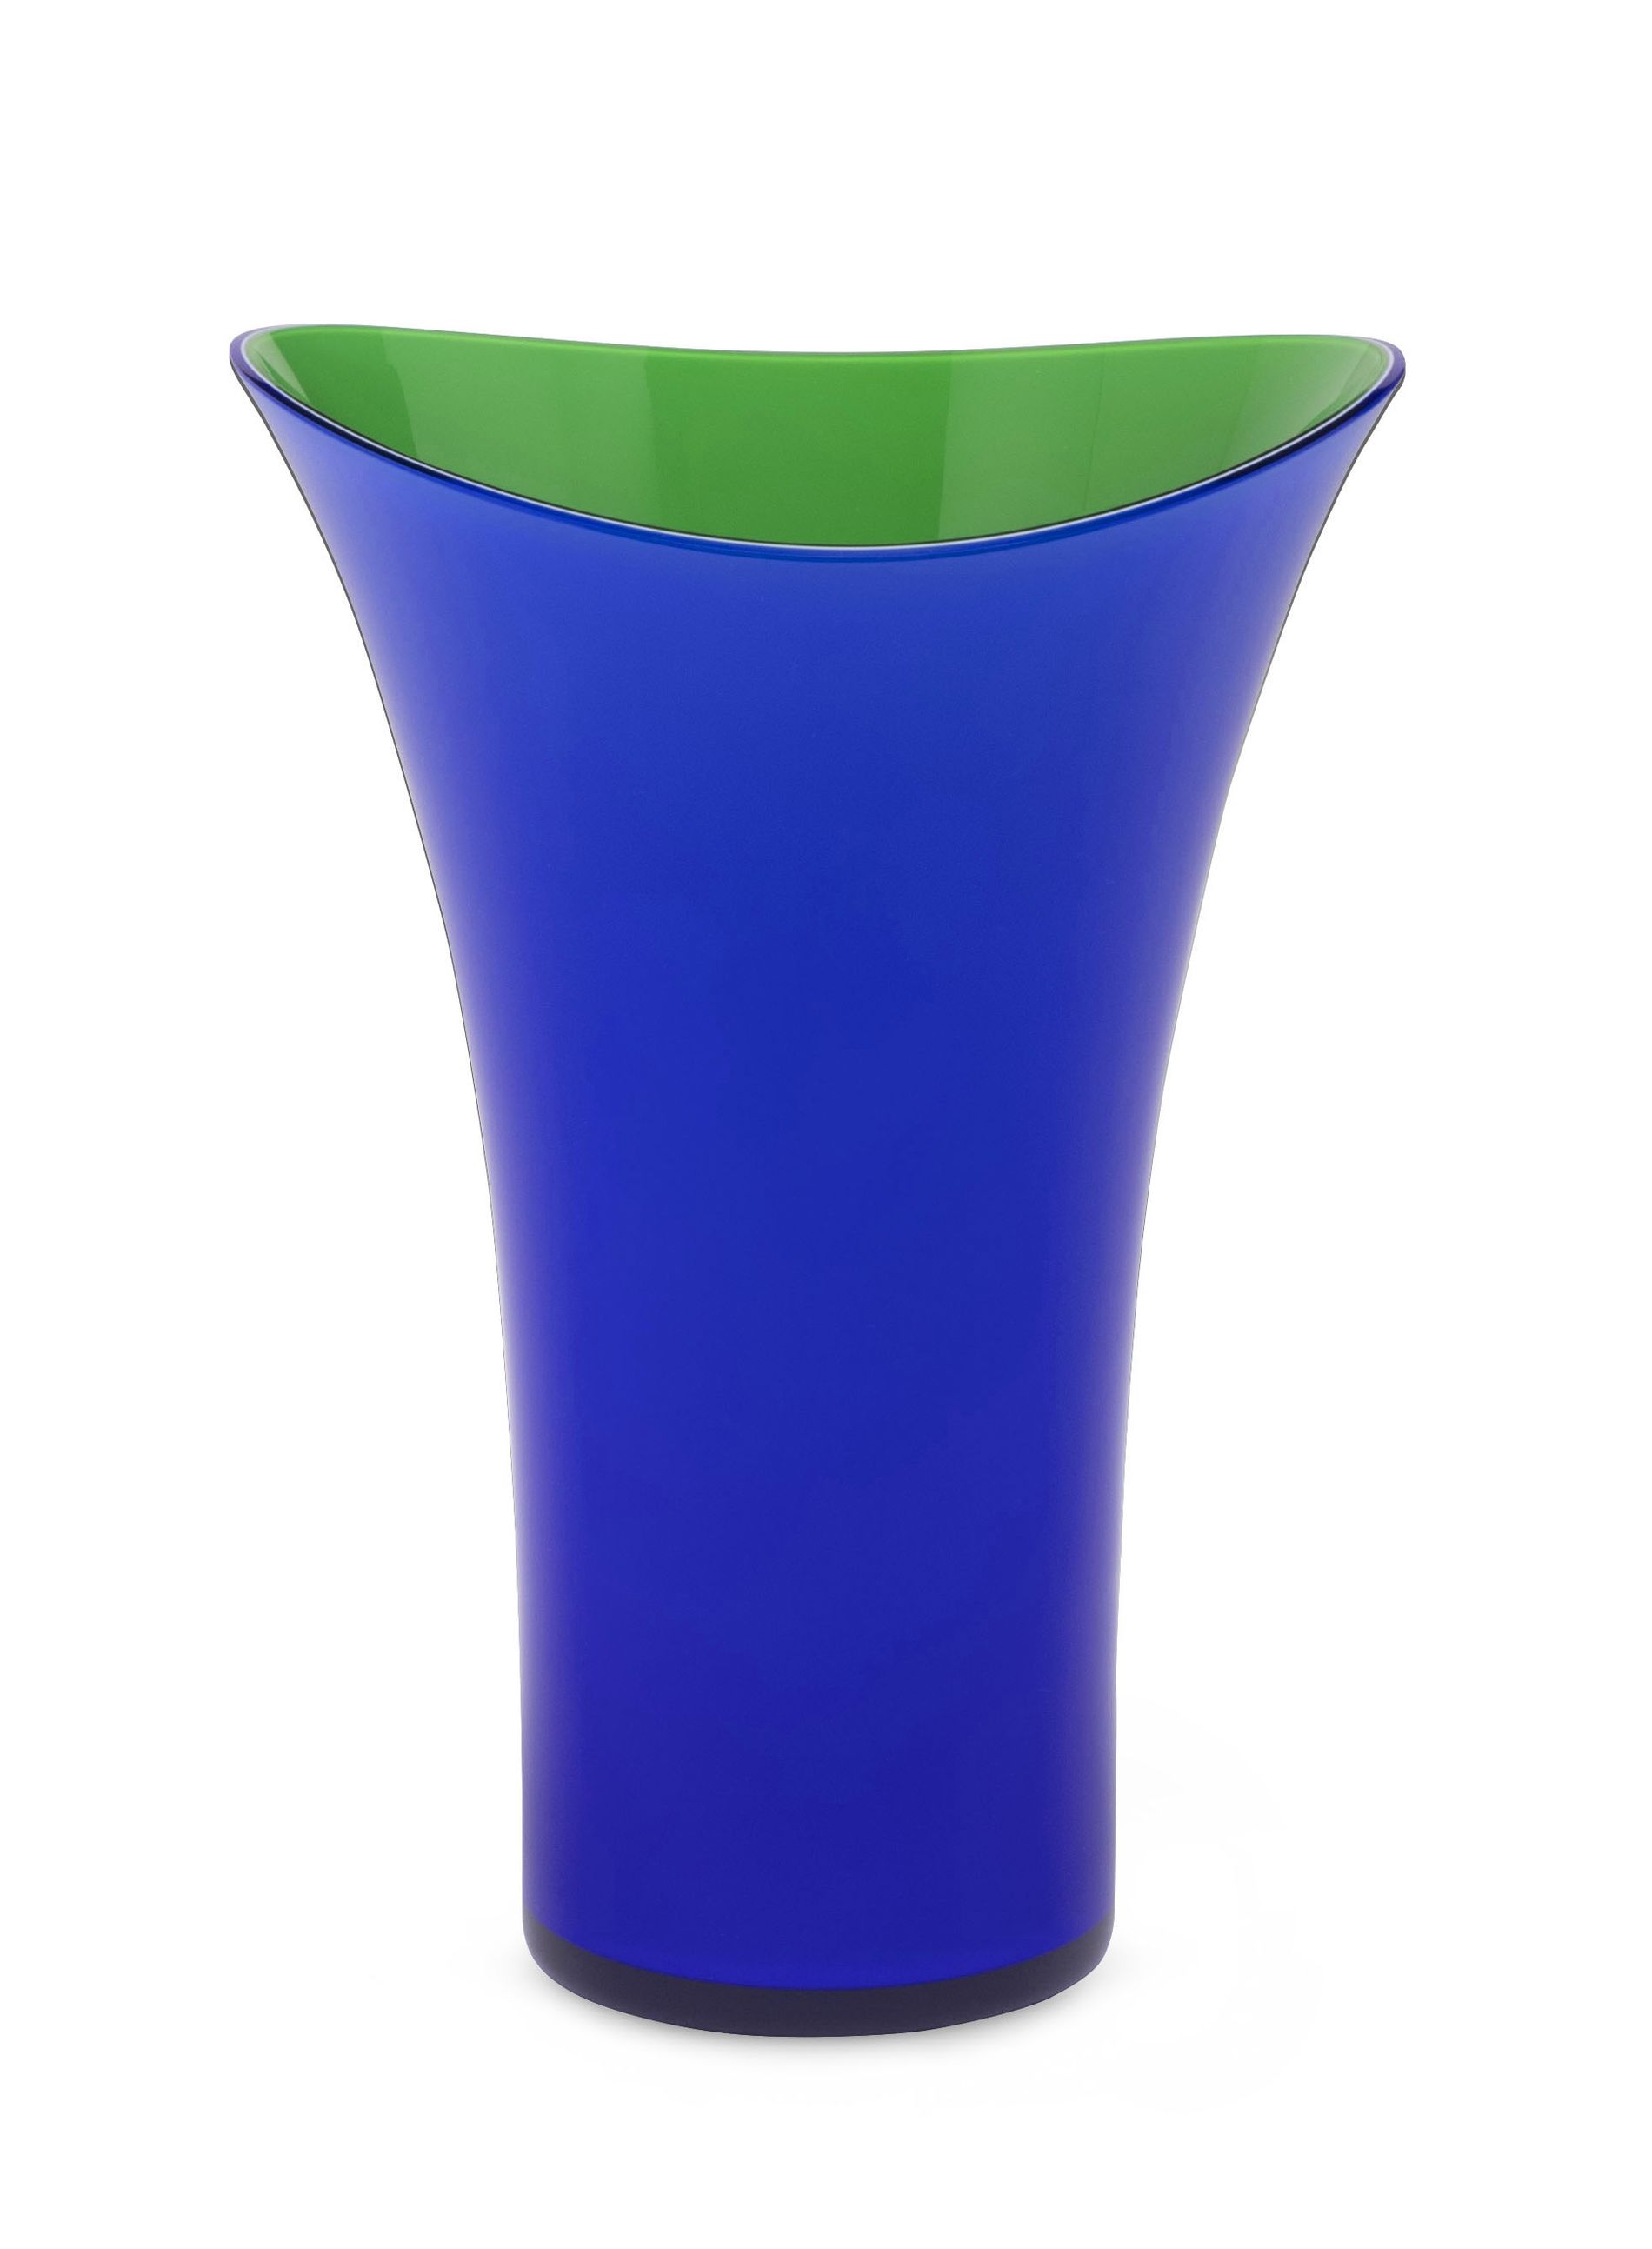 Vincenzo Nason & Cie, Medium Vase, 2000s